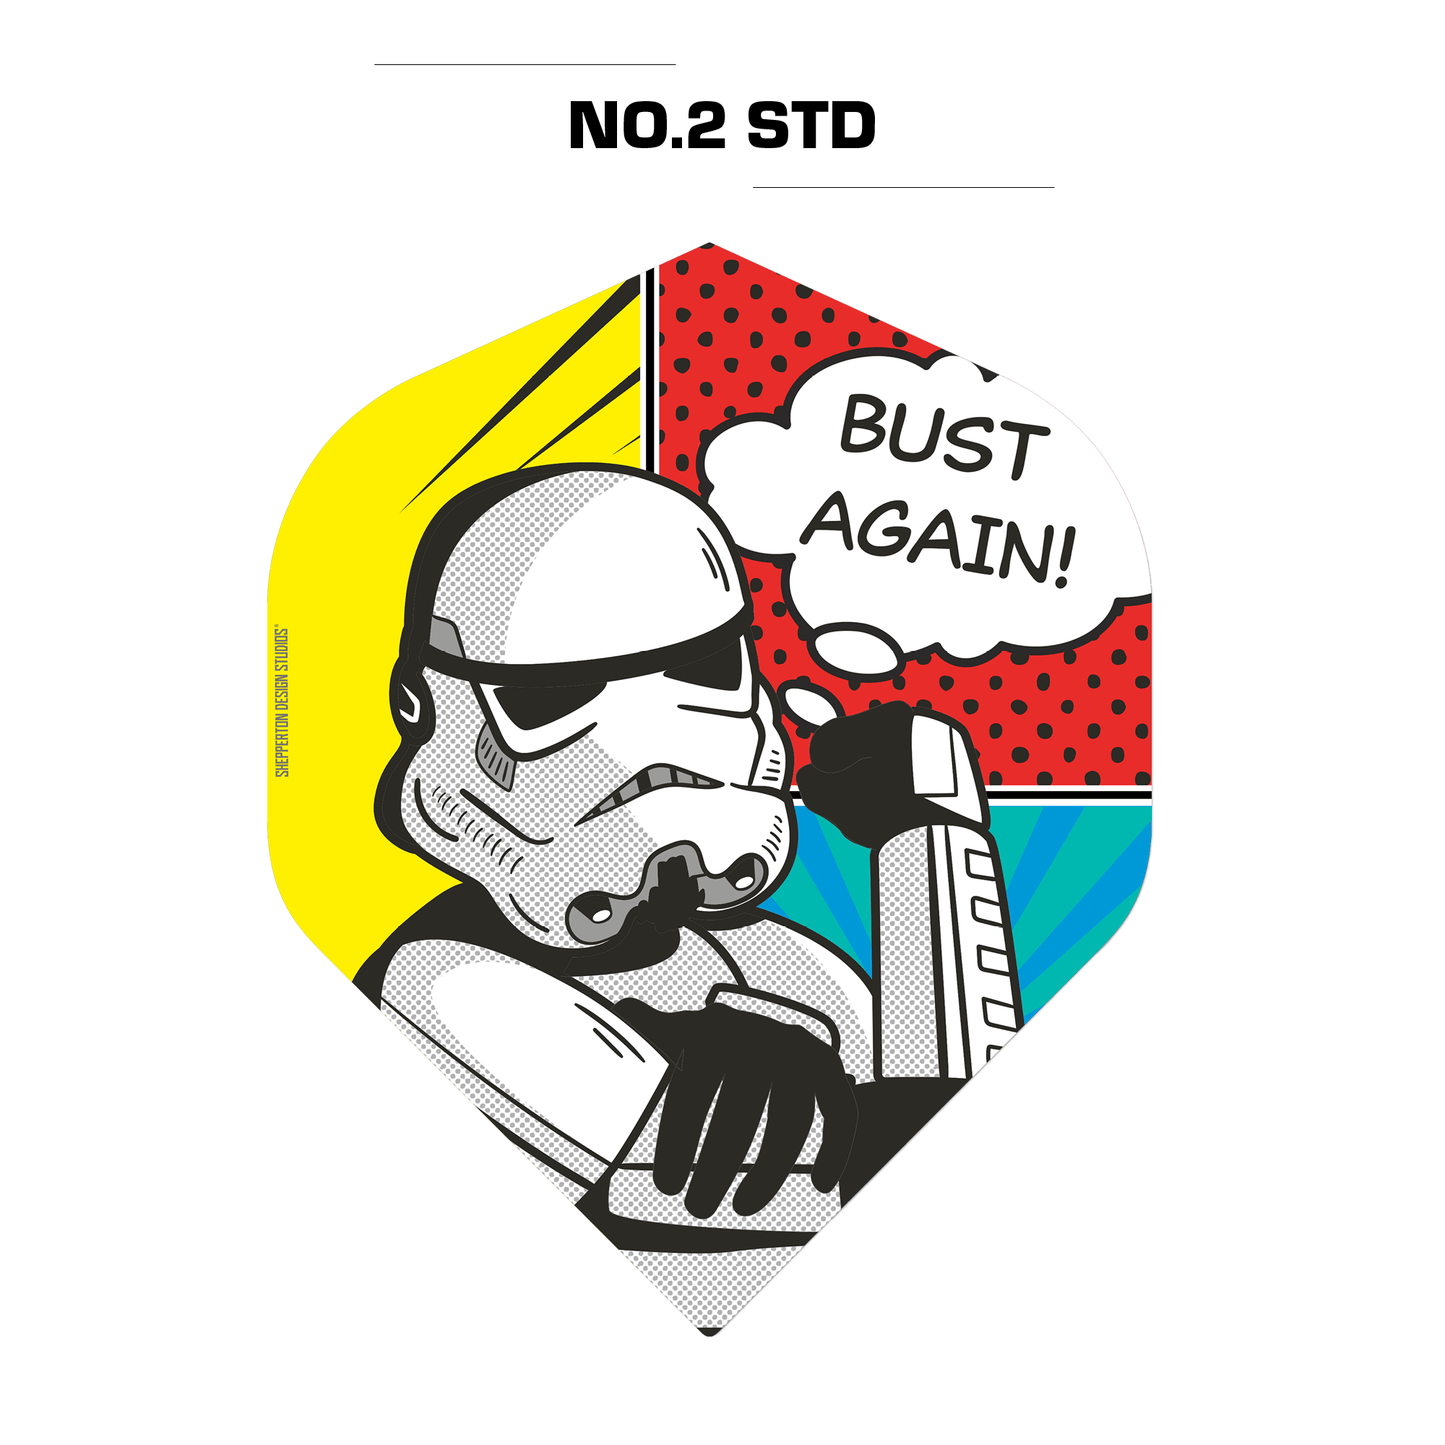 Original StormTrooper Dart Flights - Official Licensed - No2 - Std - Storm Trooper - Bust Again